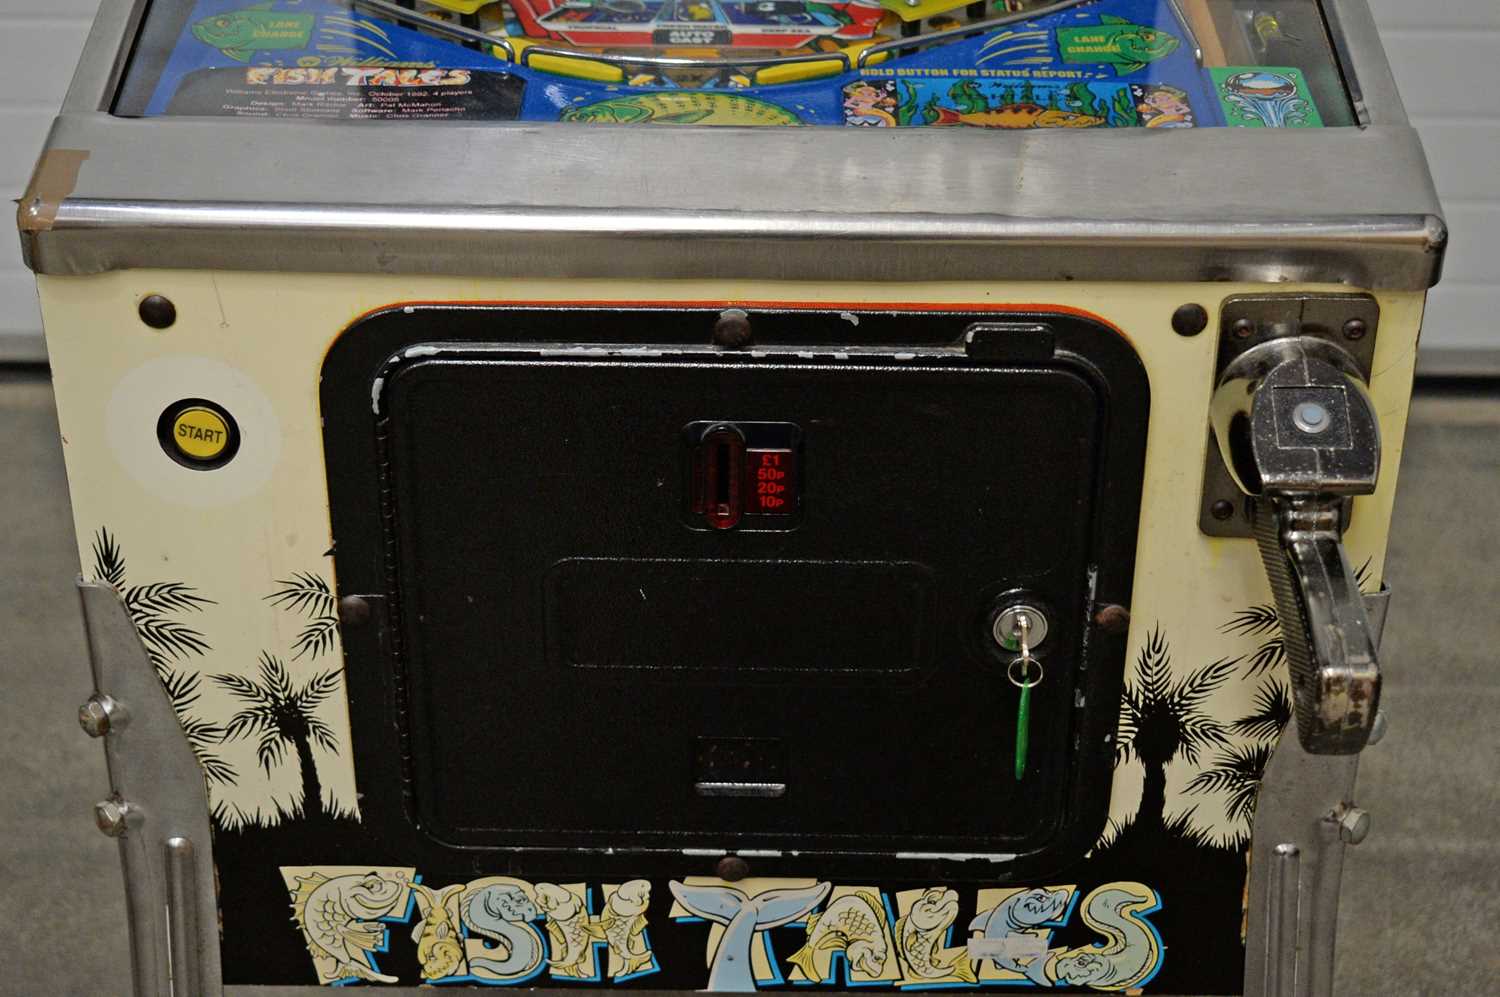 A Williams Electronic Games Inc pinball amusement machine - Image 2 of 6